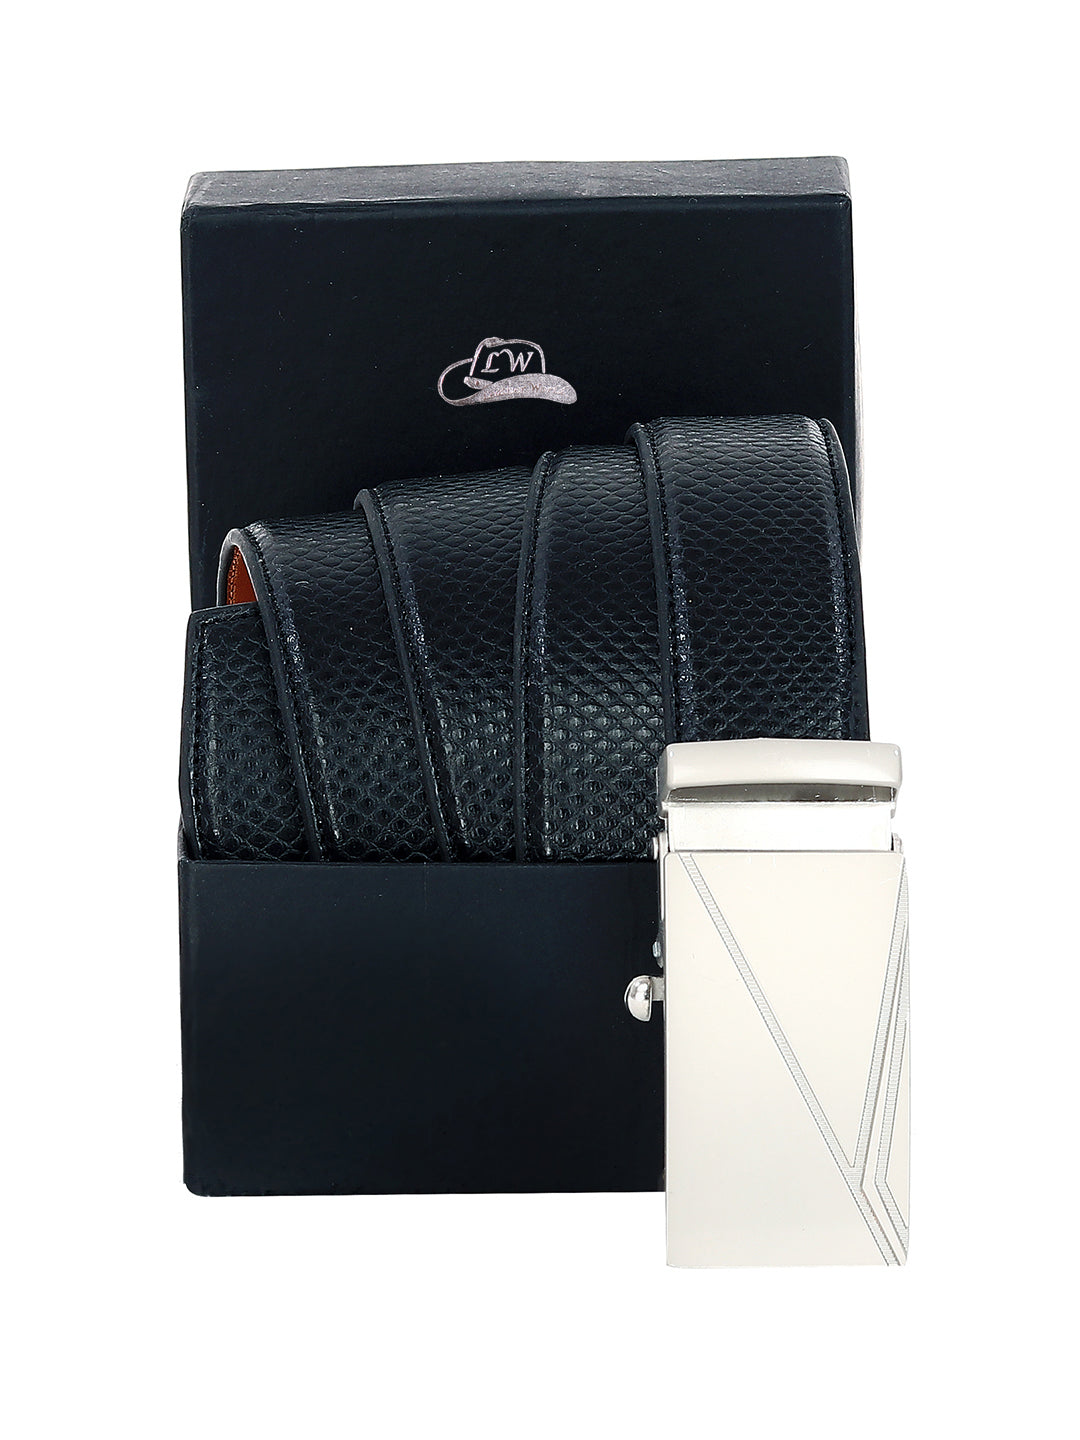 Leather World Auto Lock Buckle Vegan Leather Formal Black Belt For Men Elegant Gift Box